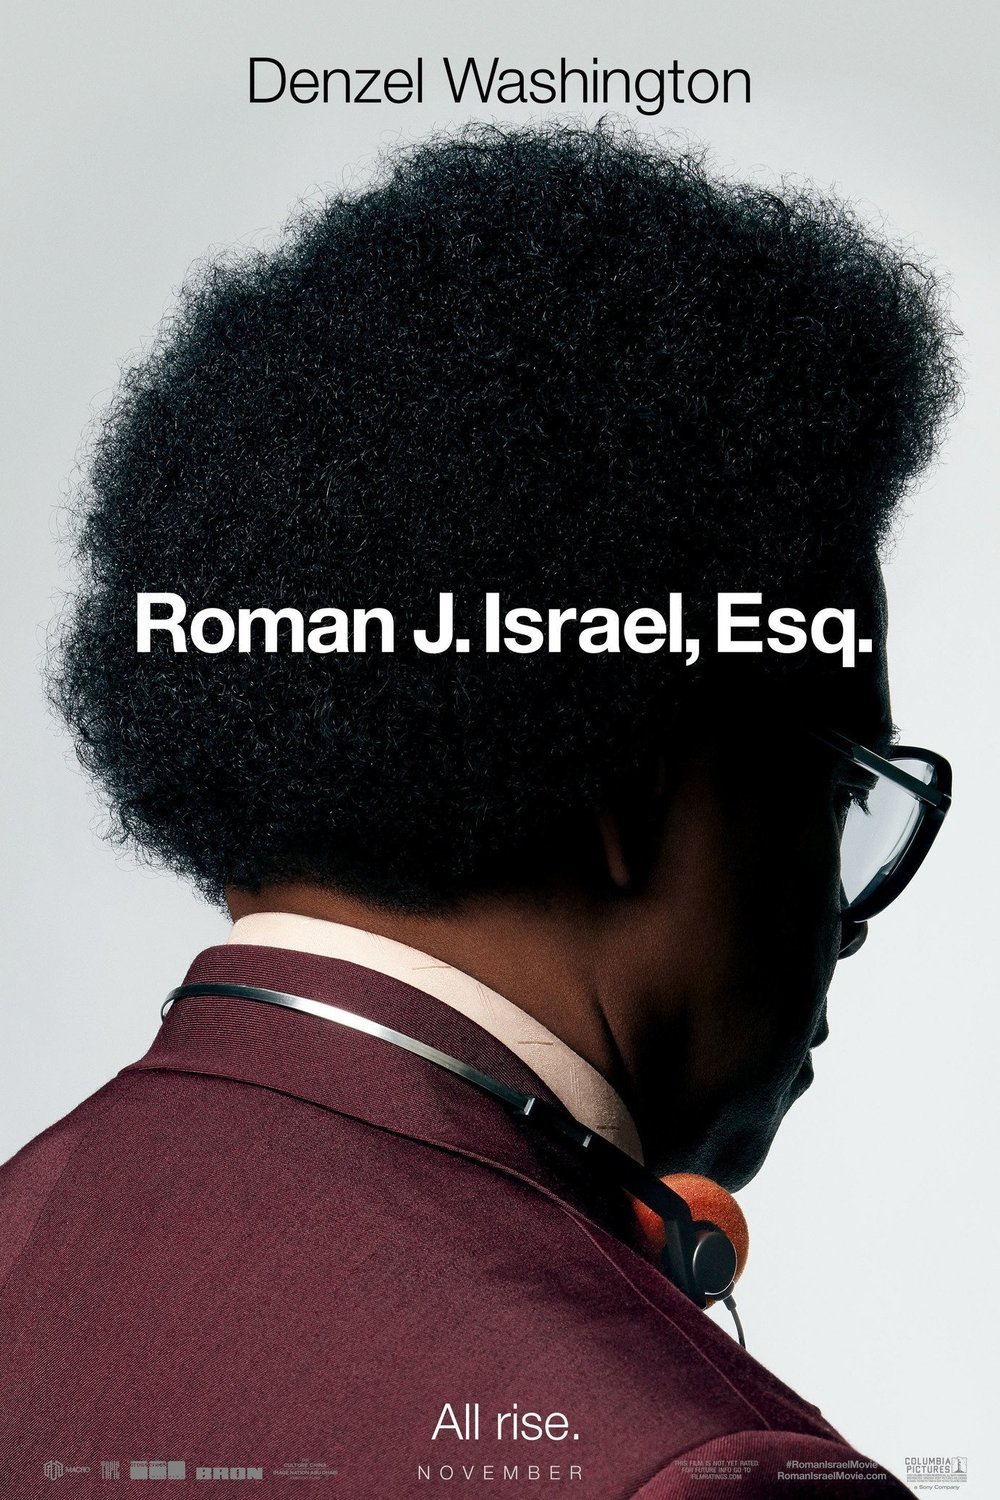 Poster of the movie Roman J. Israel, Esq.